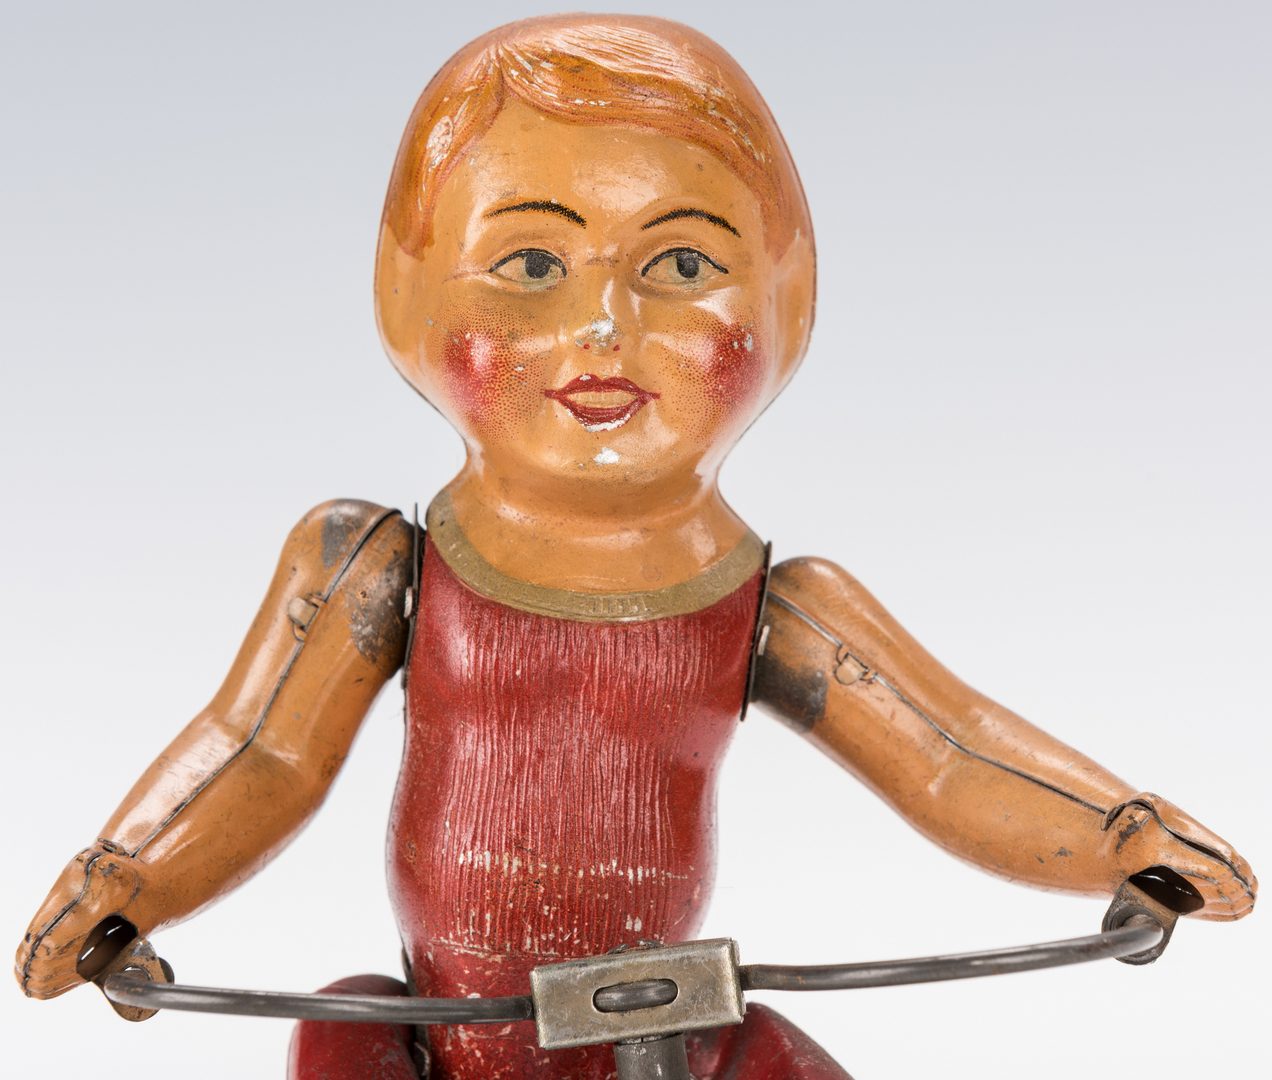 Lot 429: Vintage Kiddy Cyclist Wind-up Toy